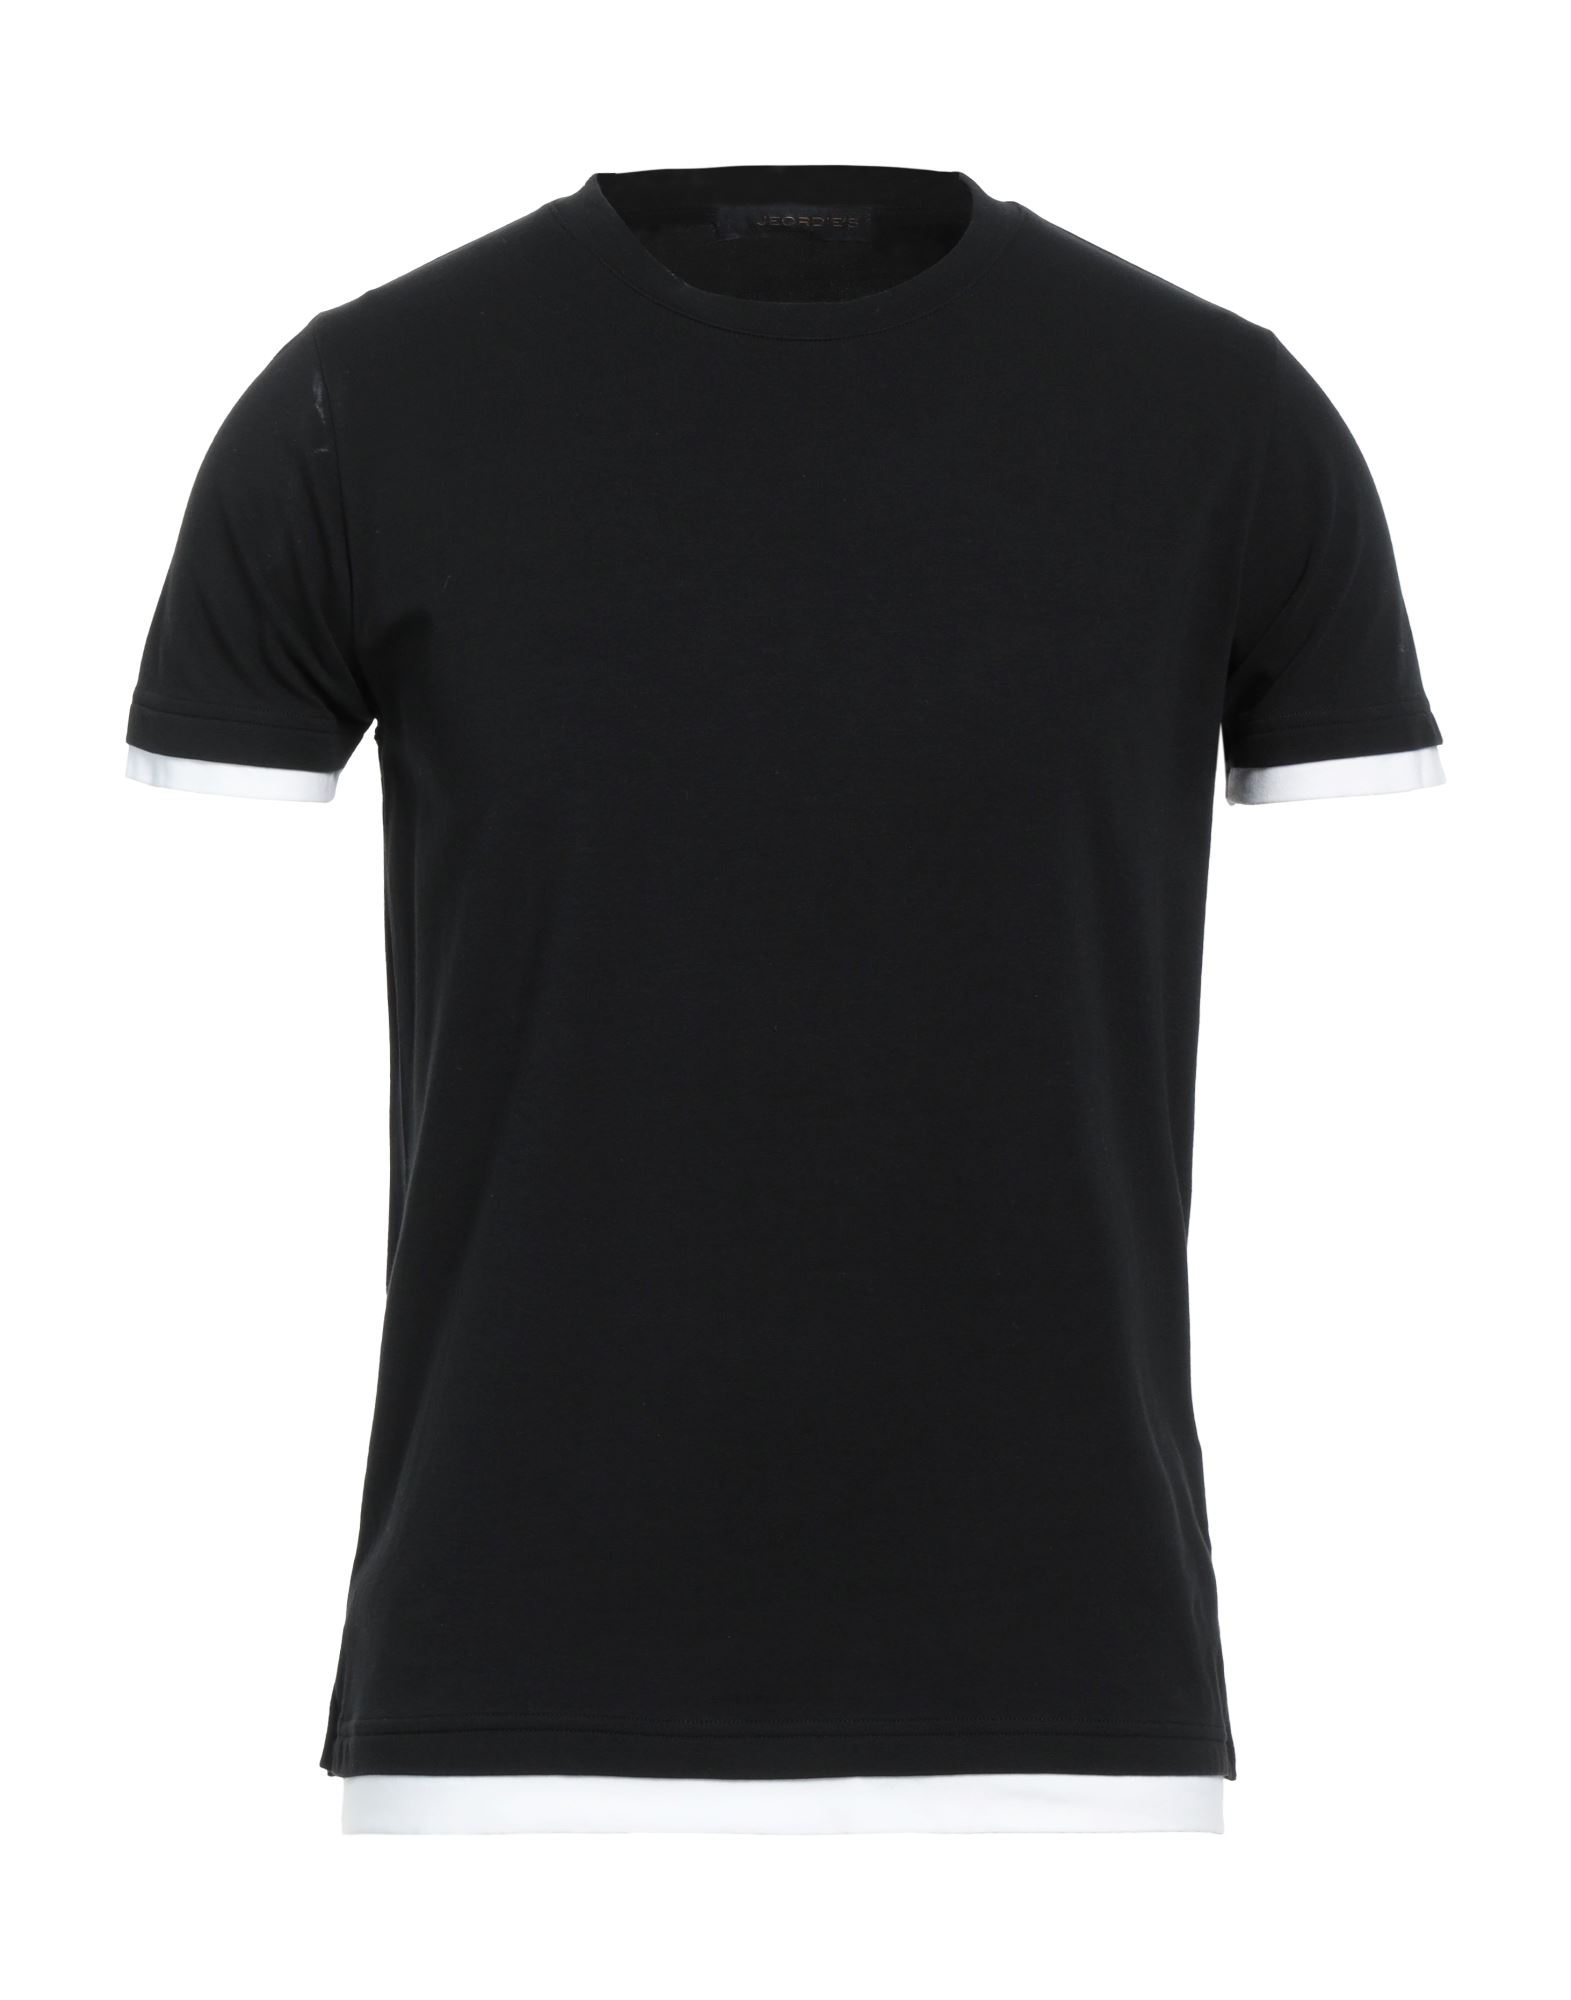 Jeordie's Man T-shirt Black Size 3xl Cotton, Elastane